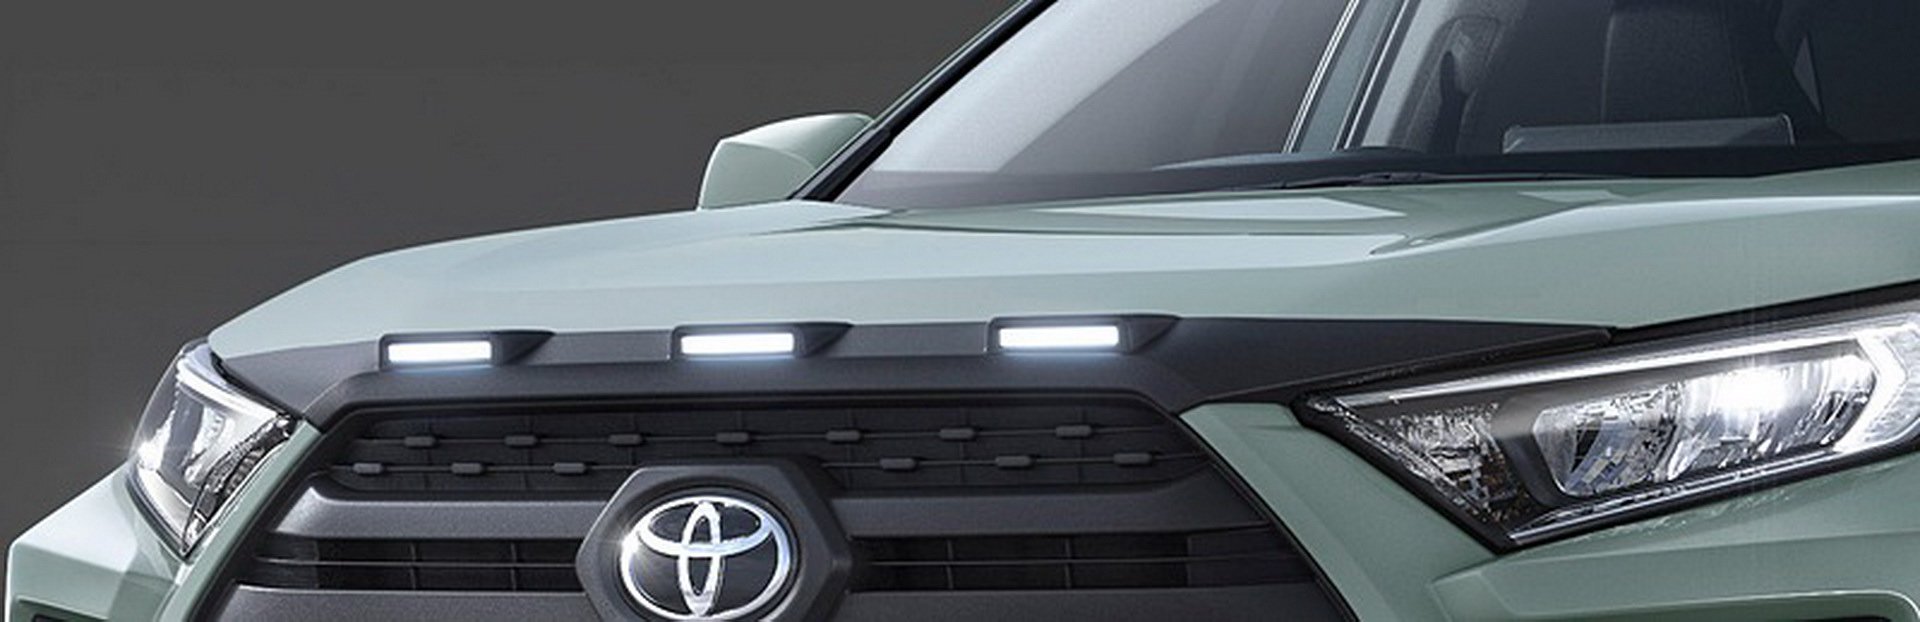 Welsprekend Baron Overtreffen 2019 Toyota RAV4 Now Available With TRD, Modellista Accessories In Japan -  autoevolution